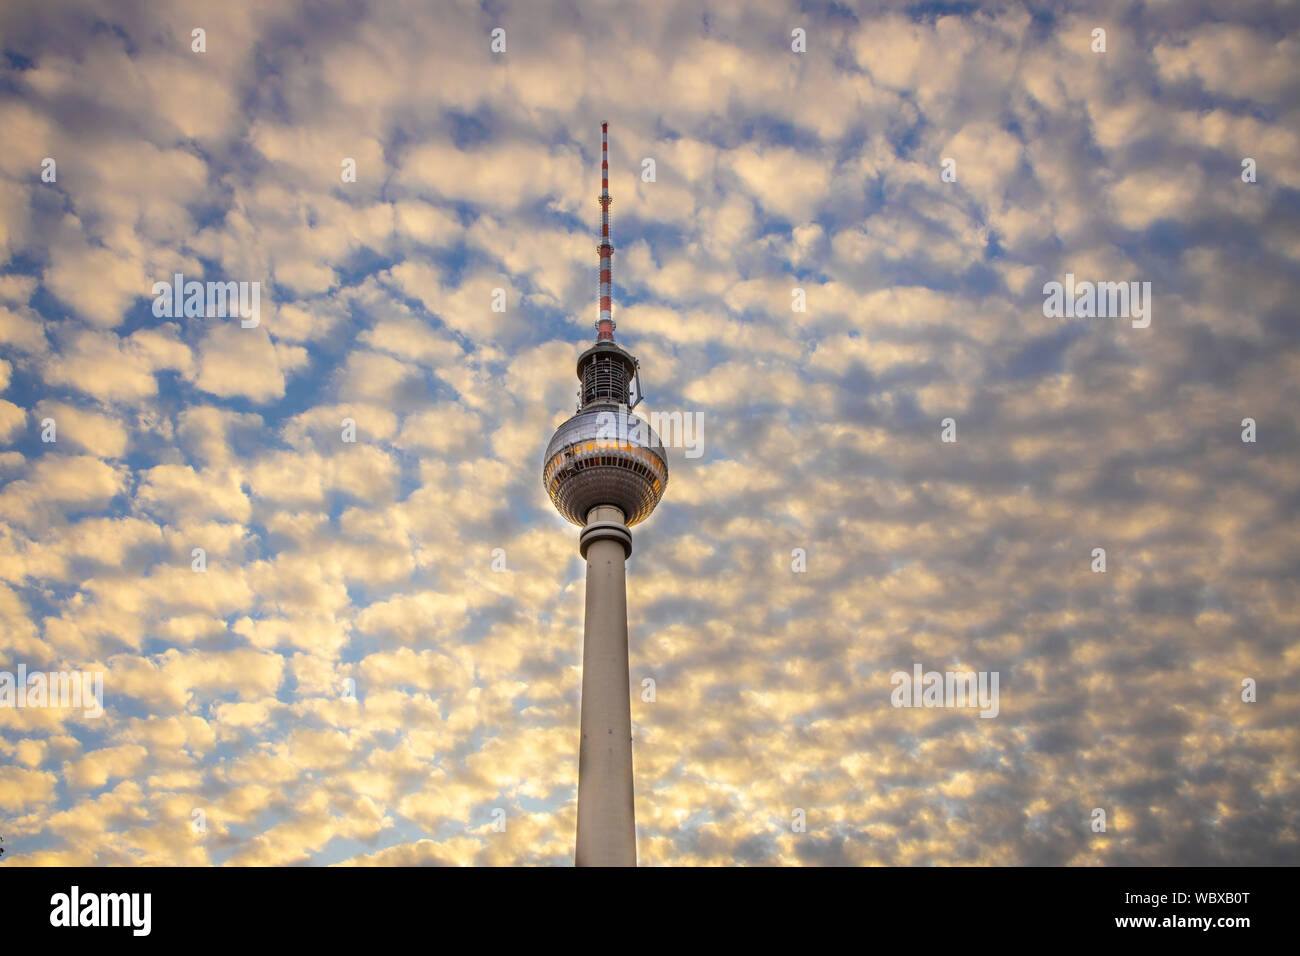 Alexanderplatz, television tower, sky with many fleecy clouds, Berlin, Stock Photo